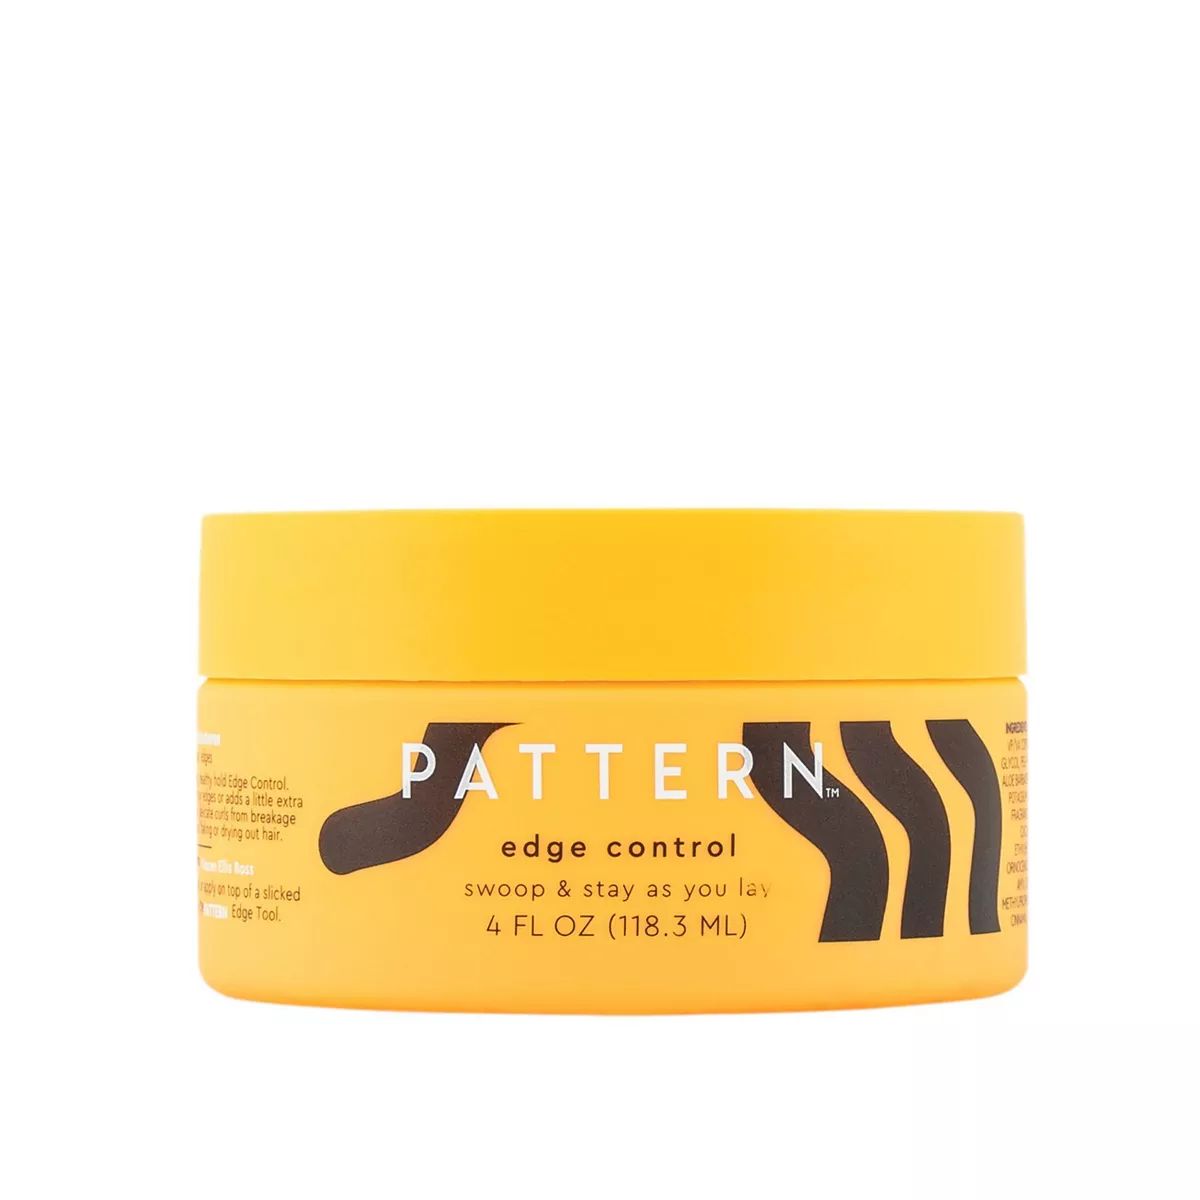 PATTERN Edge Control Hair Waxes - 3.4 fl oz - Ulta Beauty | Target